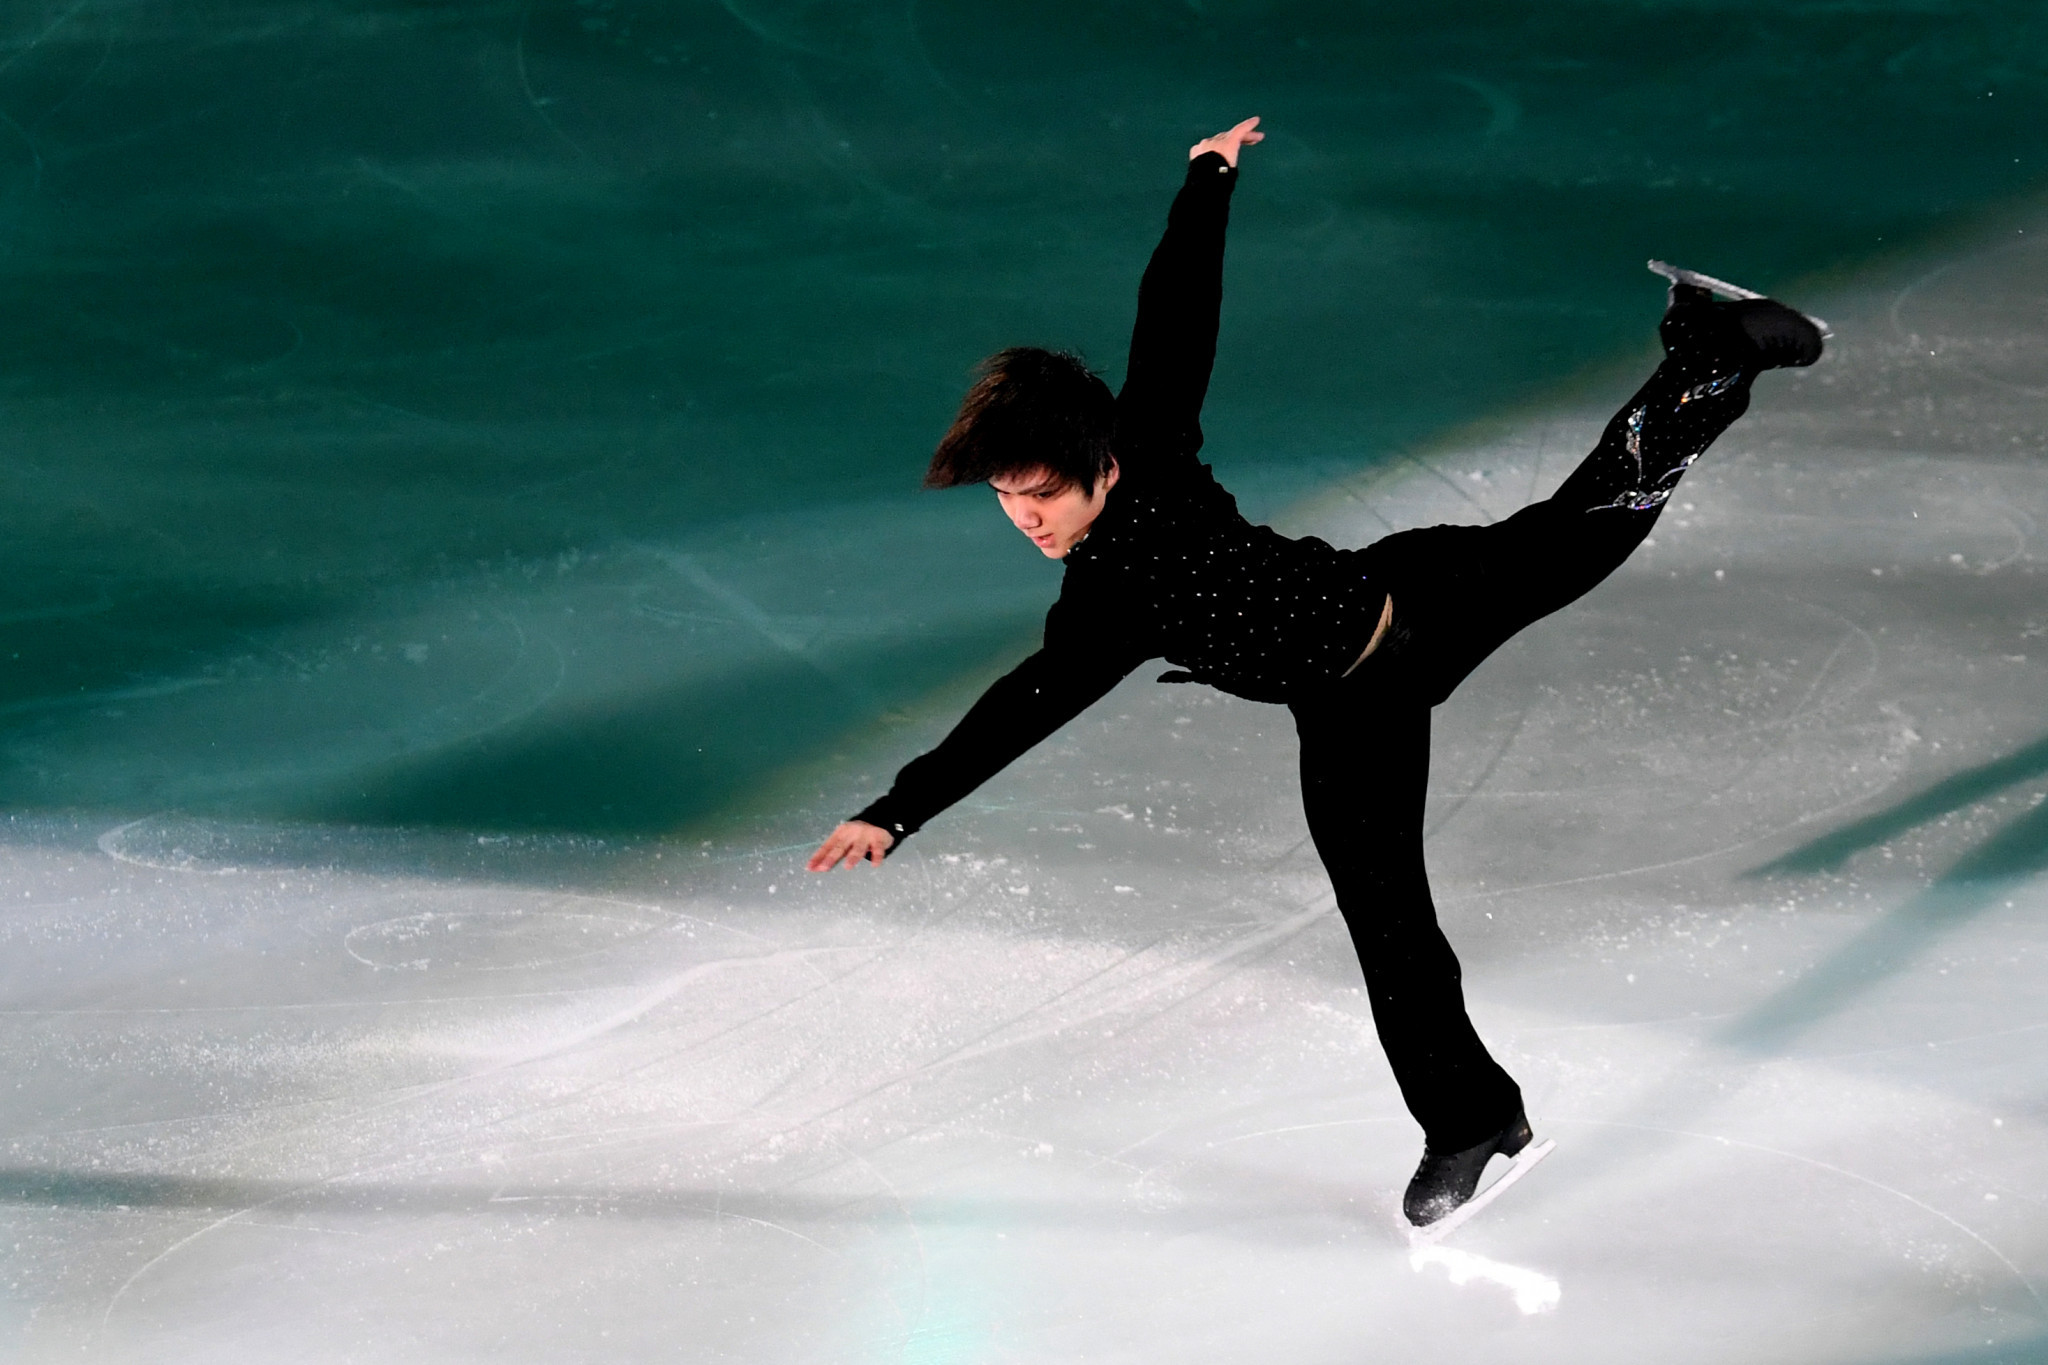 Nagoya native Uno looks for glory on home ice at ISU Grand Prix of Figure Skating Final